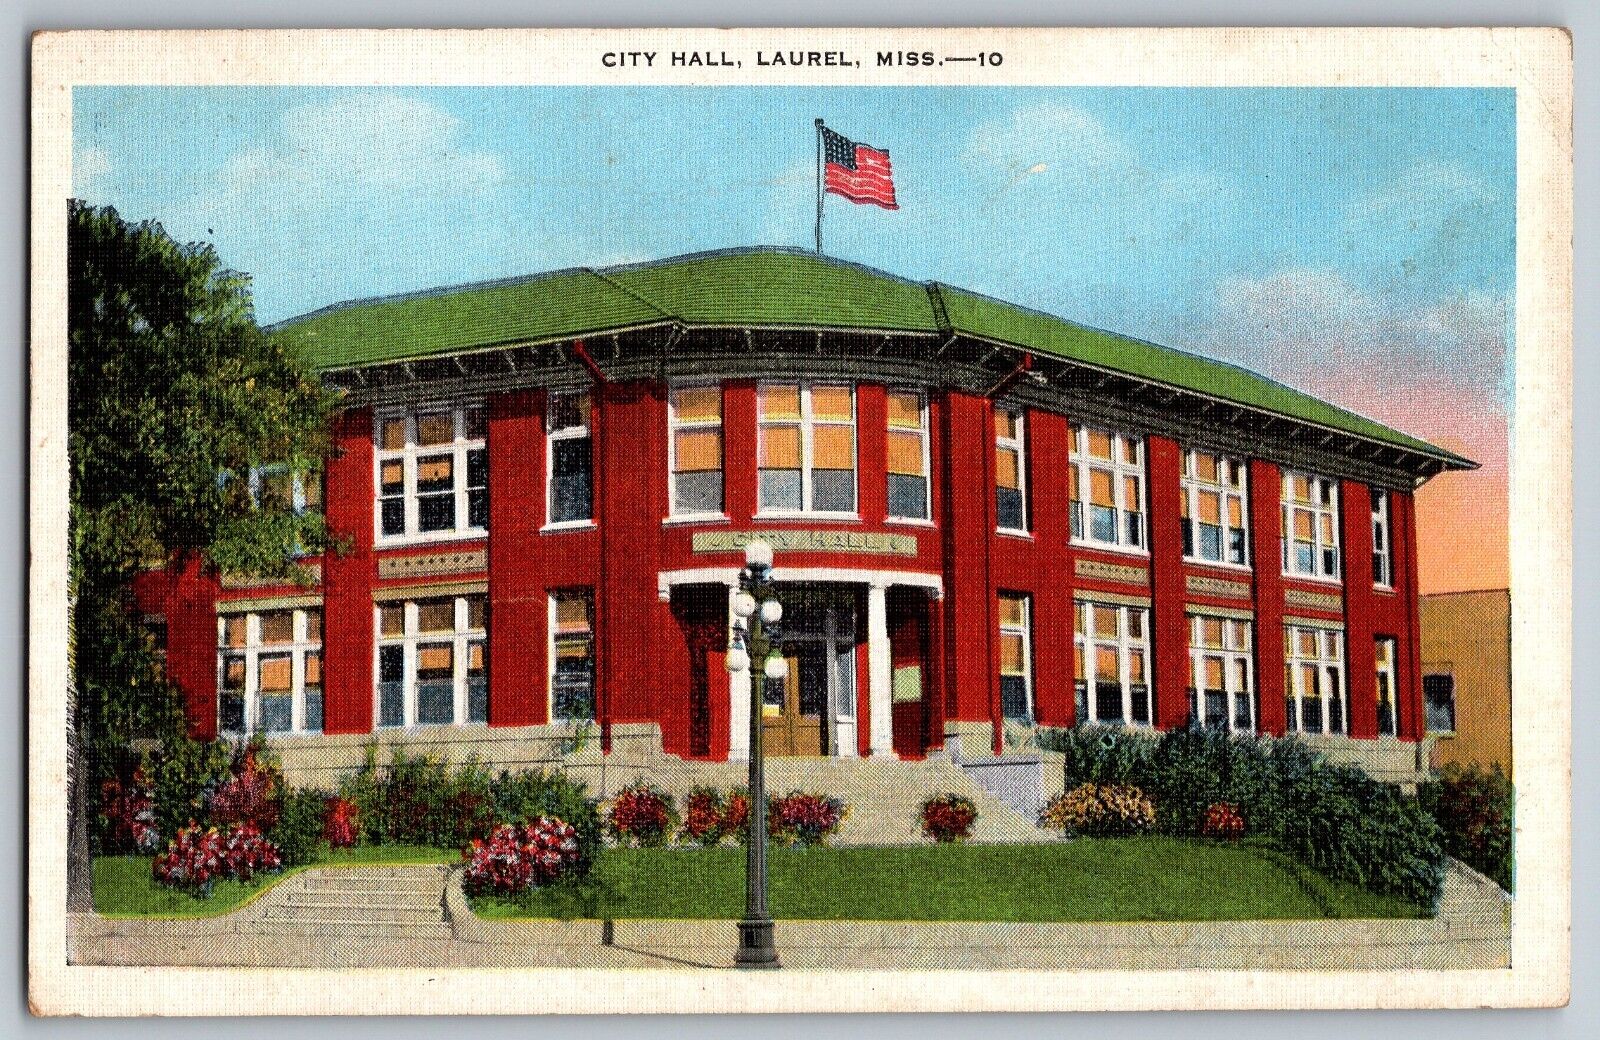 Laurel, Mississippi - Beautiful City Hall Building - Vintage Postcard - Posted